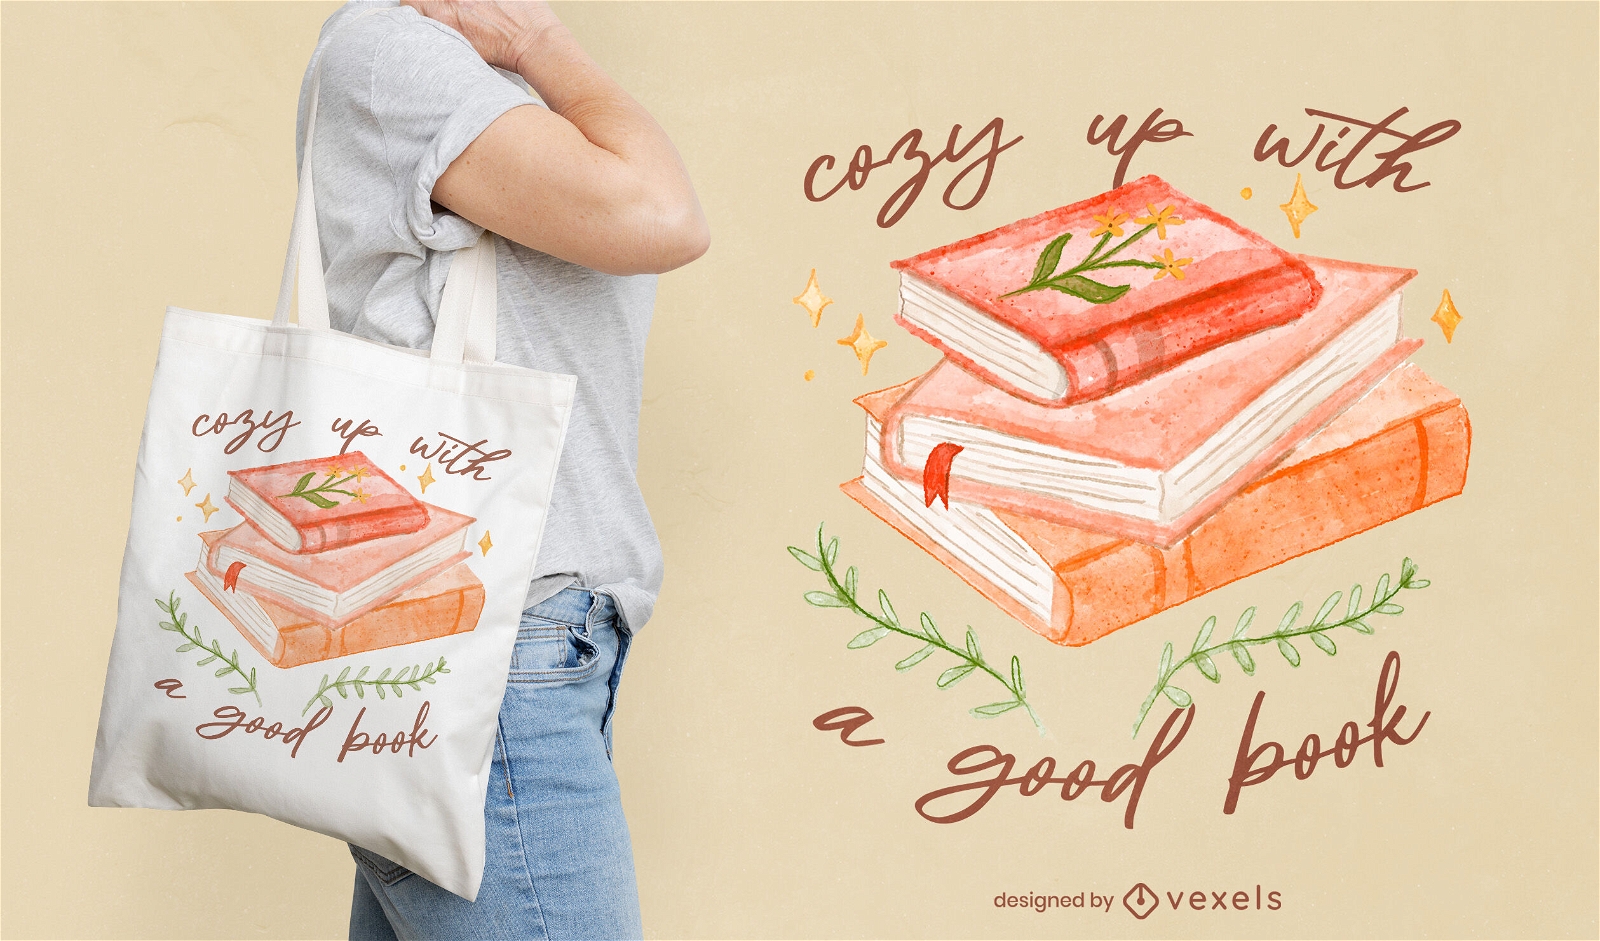 Book lover's comfort tote bag design